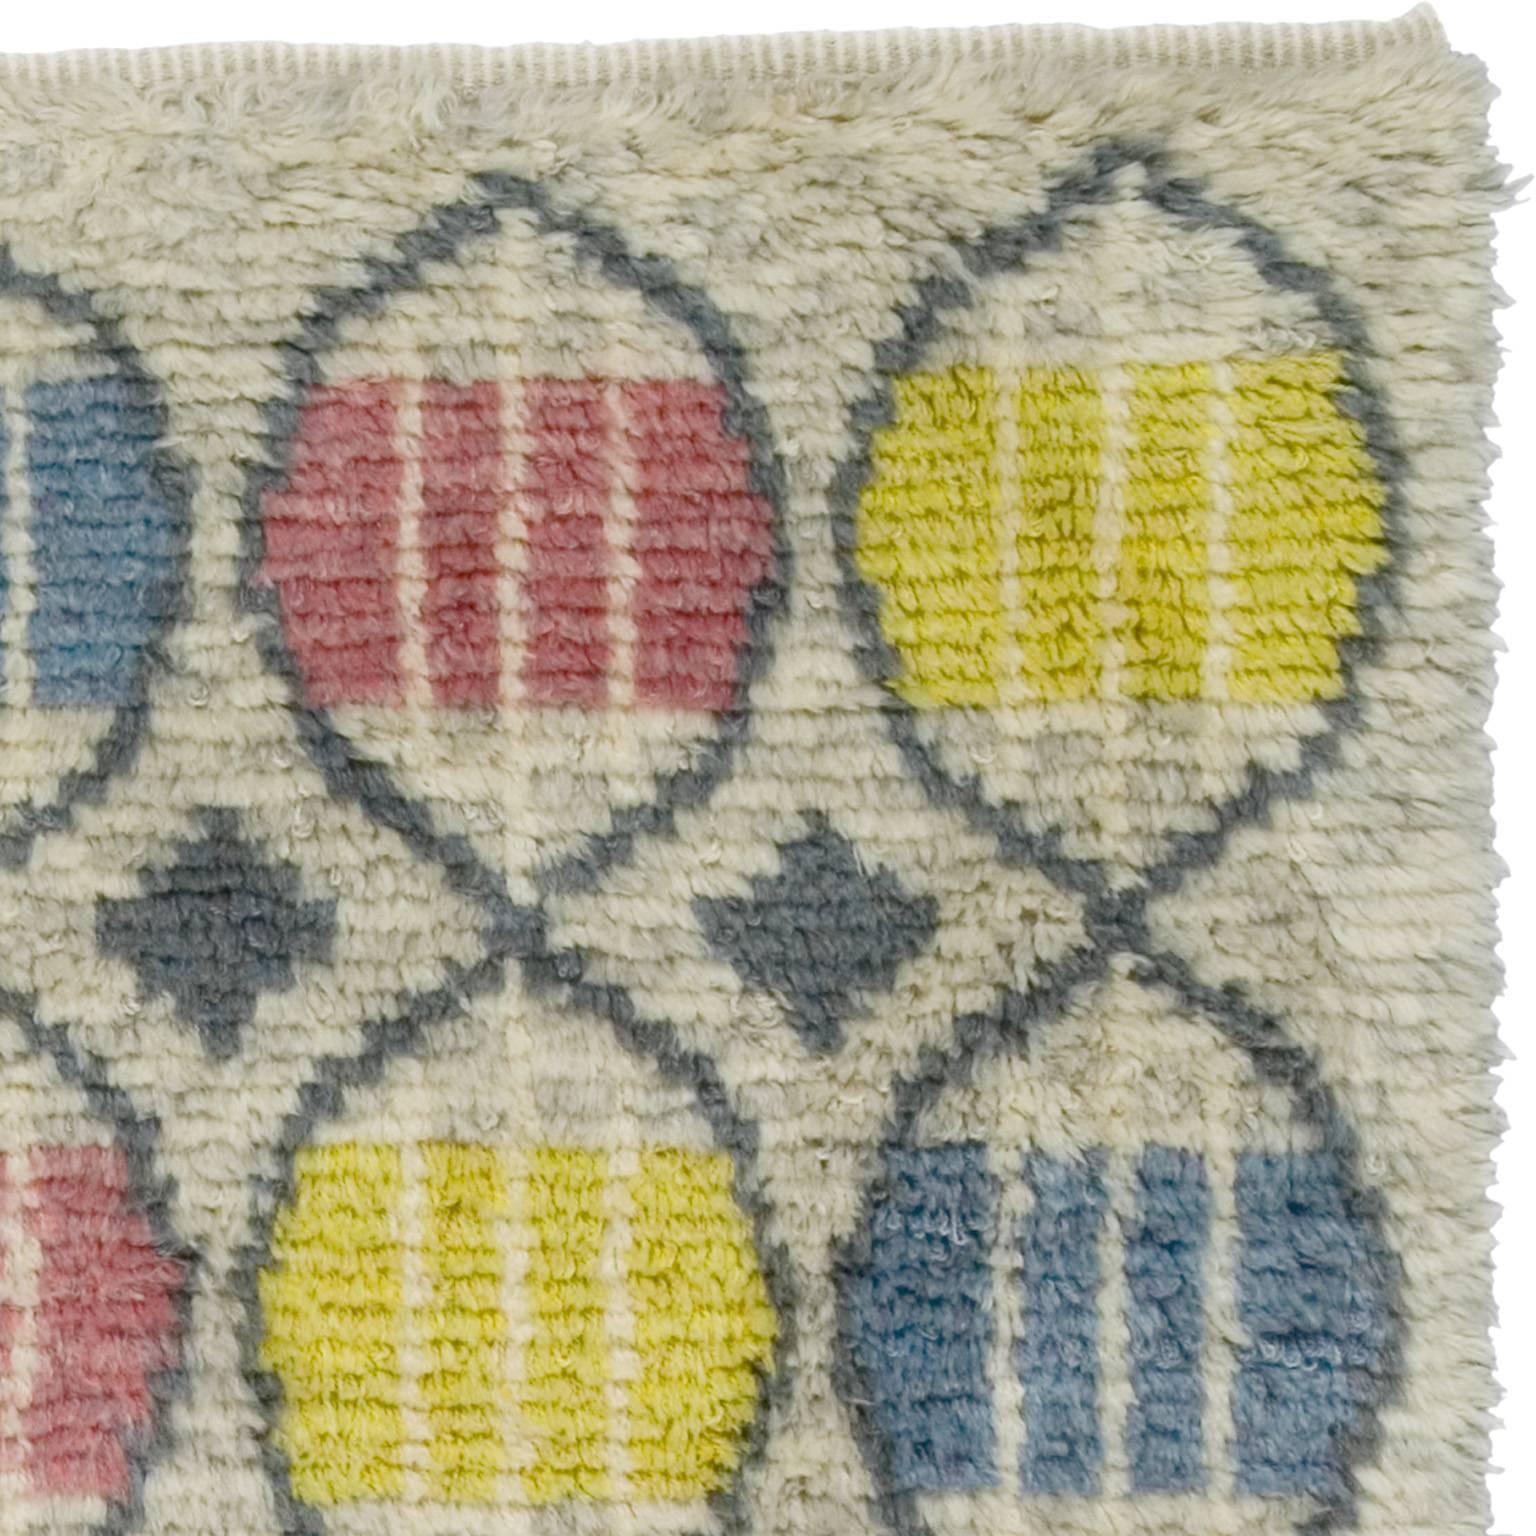 Swedish Rya technique carpet.
Sweden Mid-20th Century
handwoven
7'6